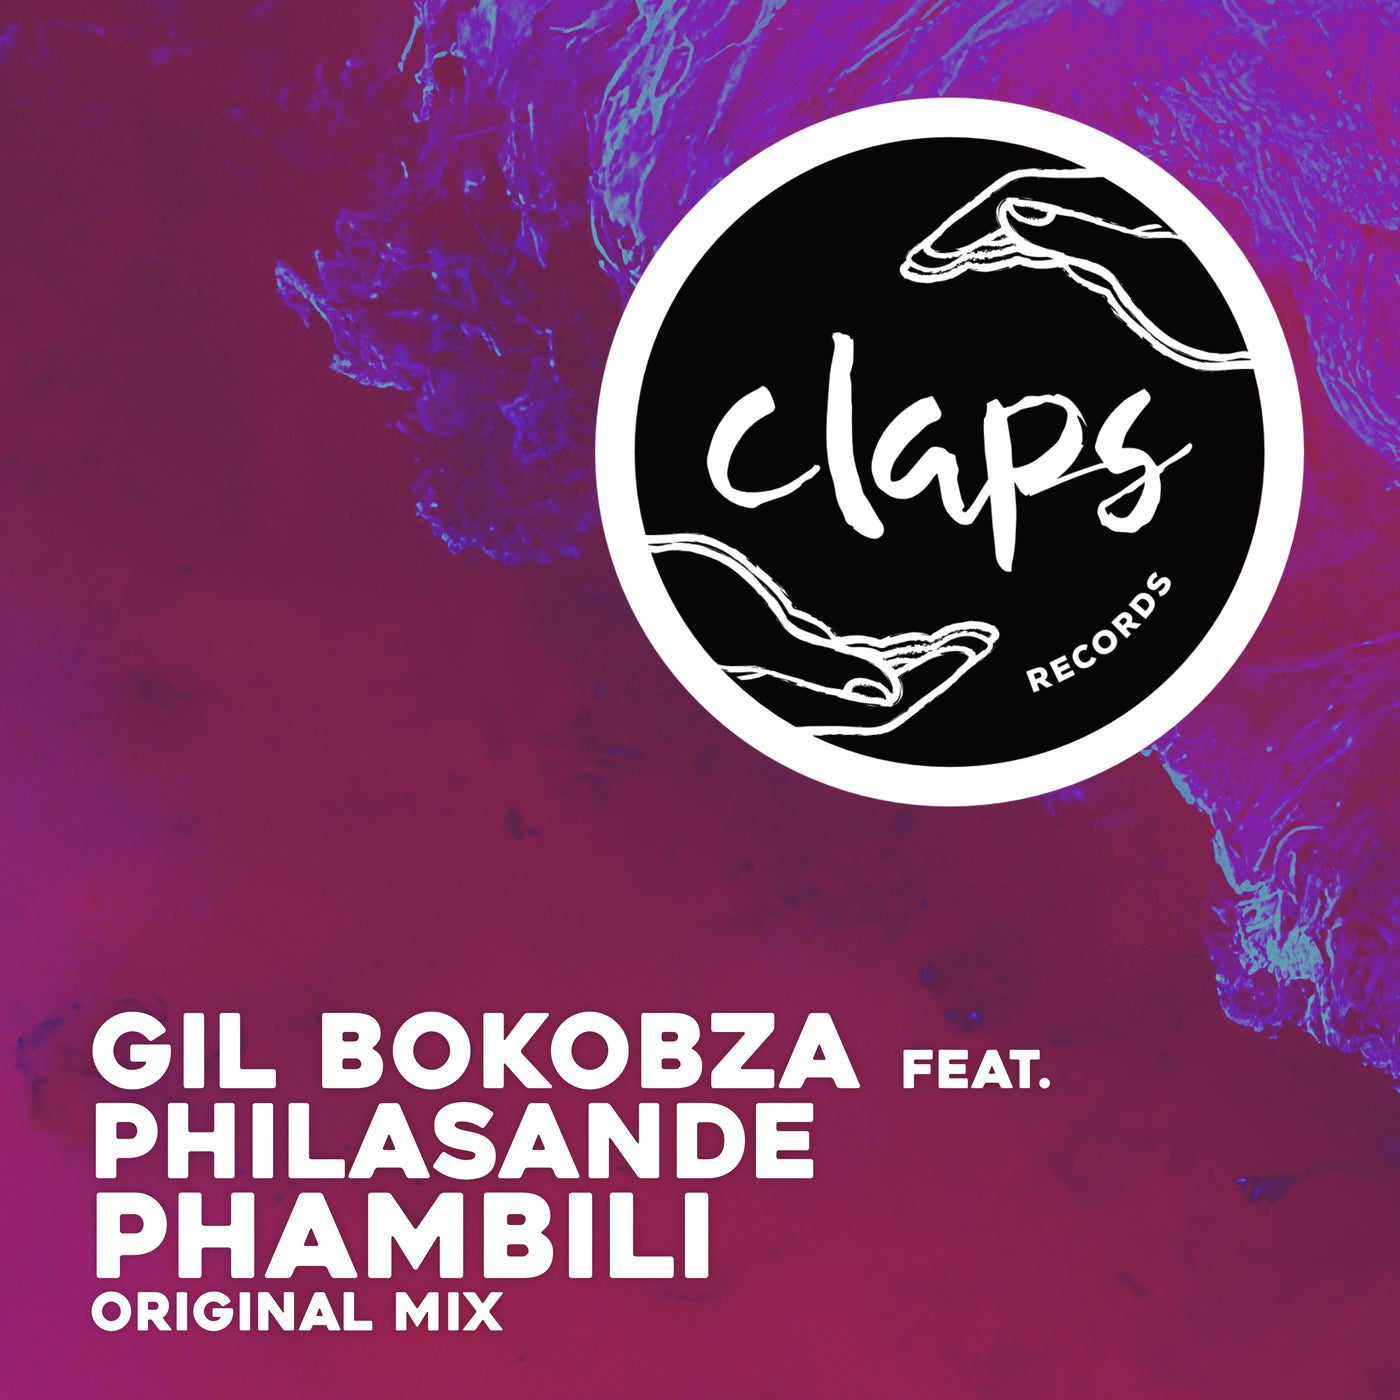 image cover: Gil Bokobza, PhilaSande - Phambili on Claps Records